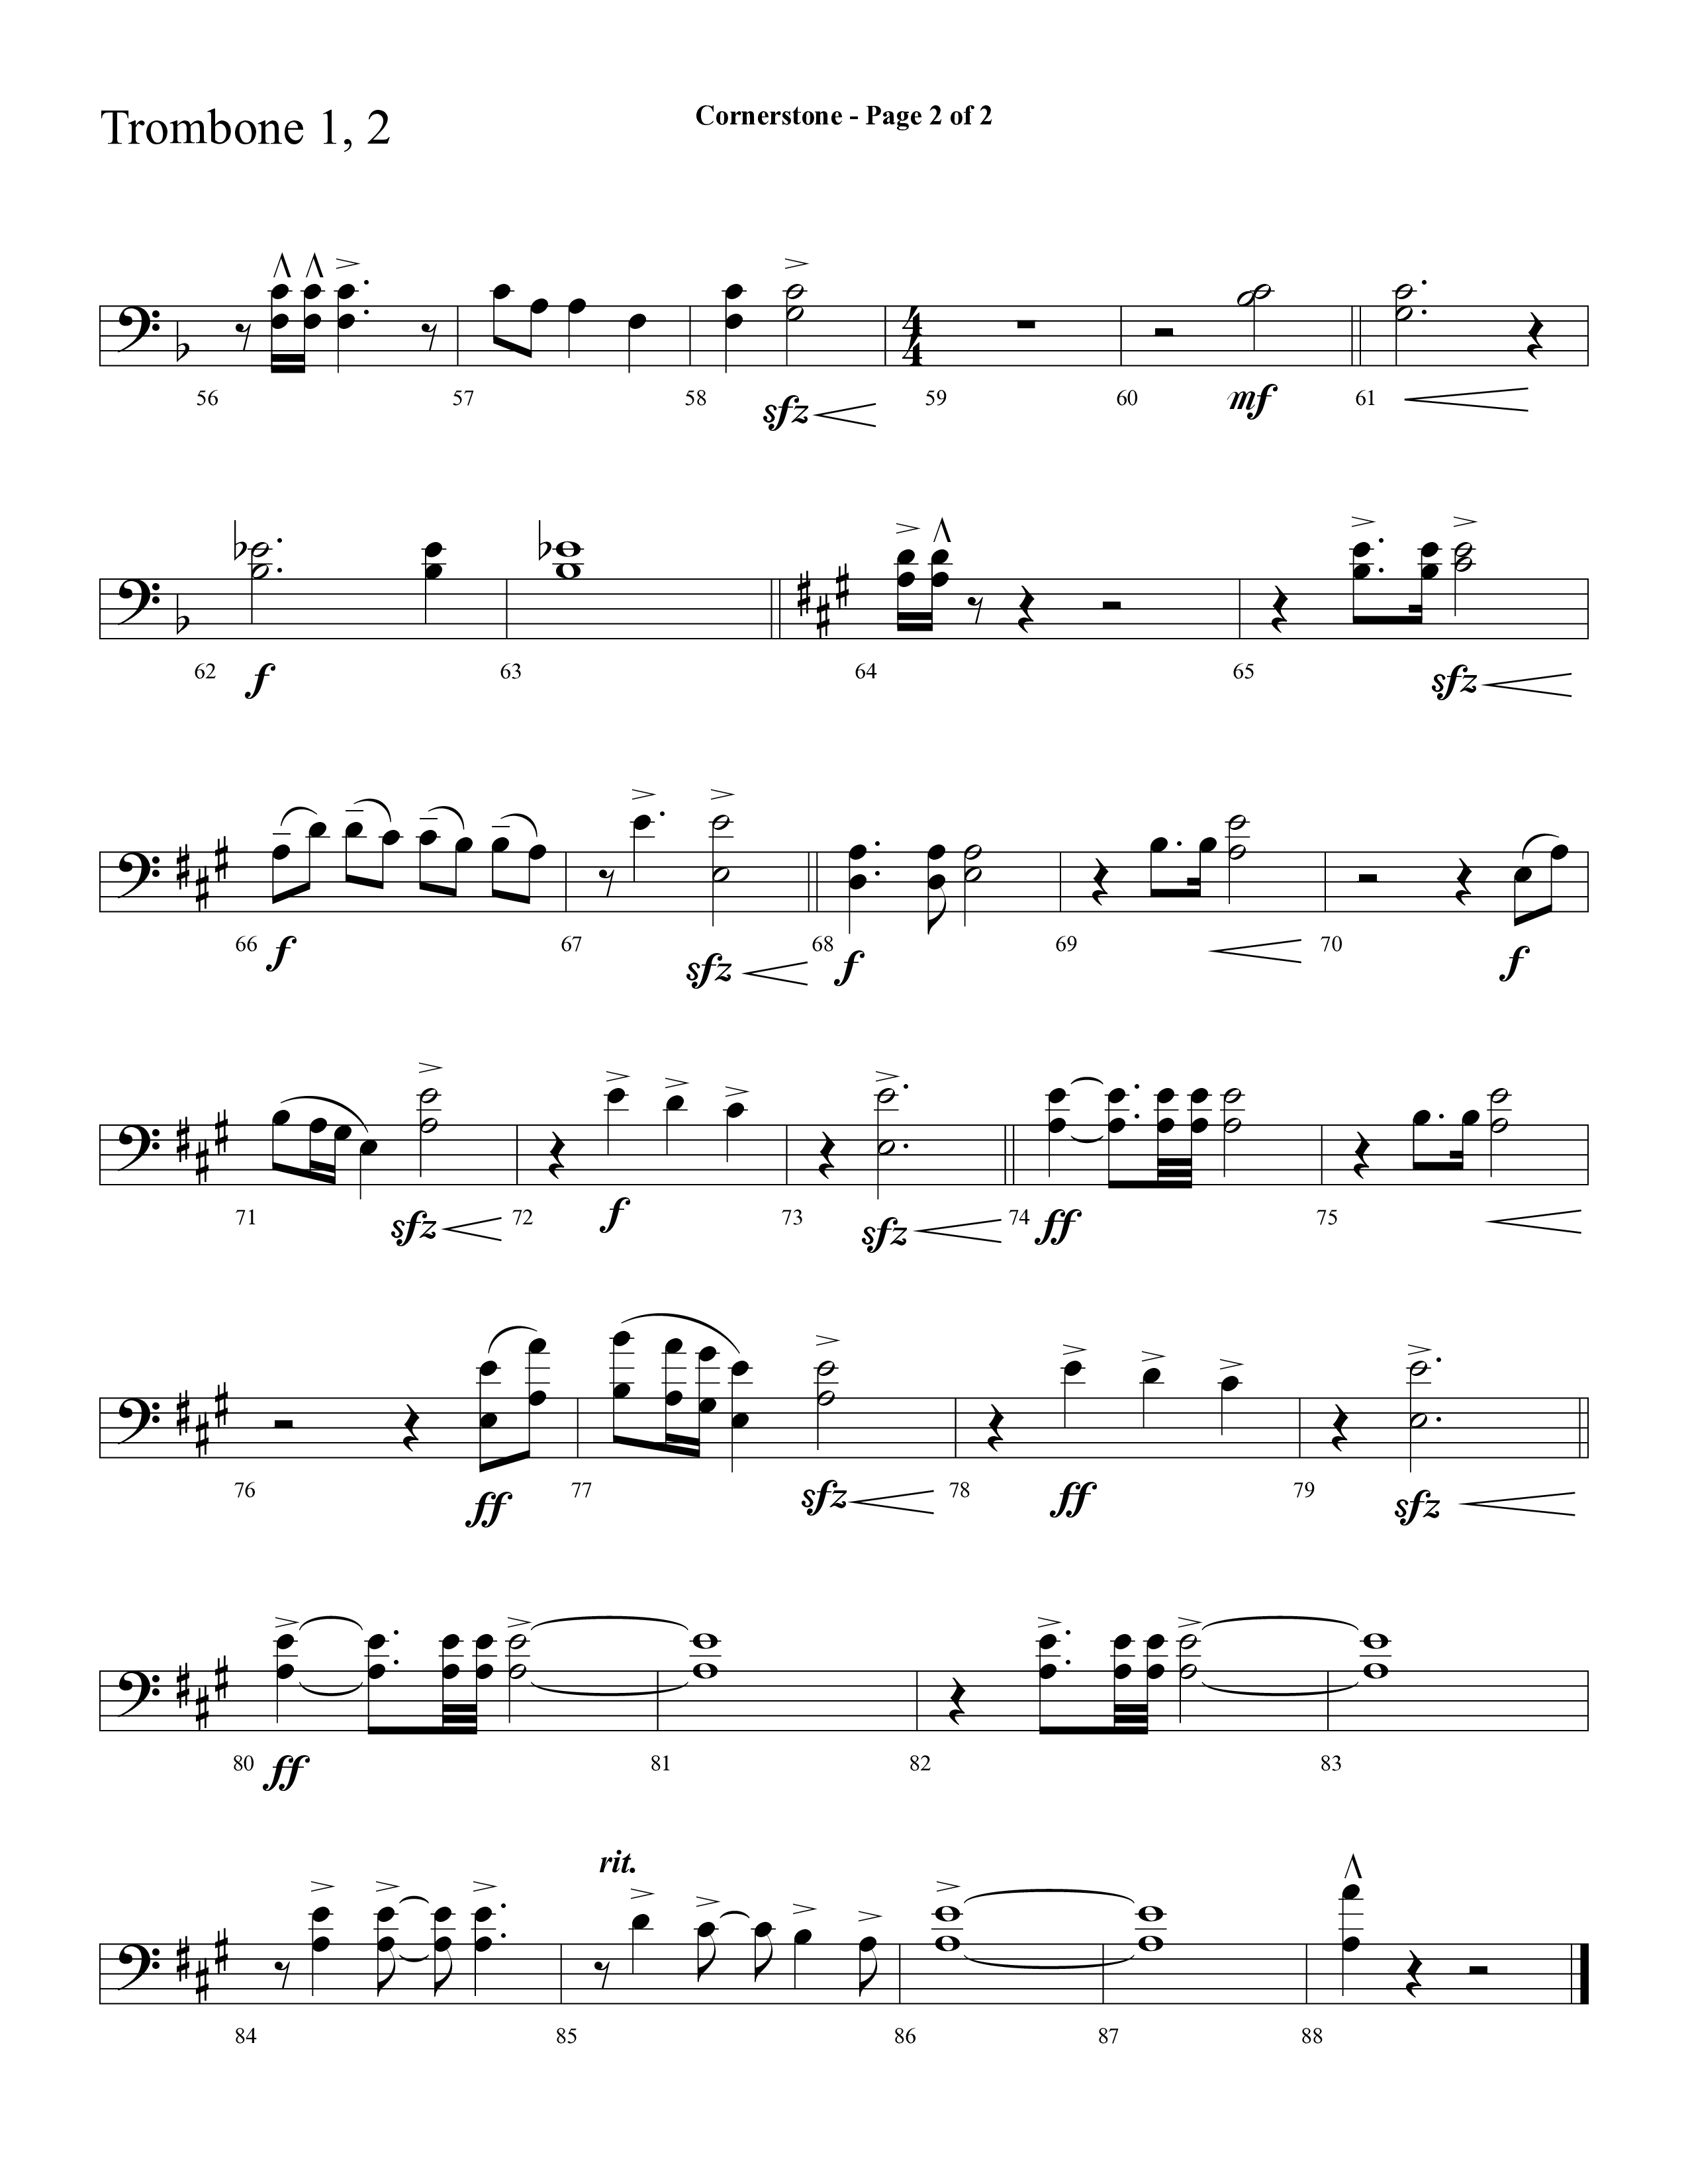 Cornerstone (with The Solid Rock) (Choral Anthem SATB) Trombone 1/2 (Lifeway Choral / Arr. Cliff Duren)